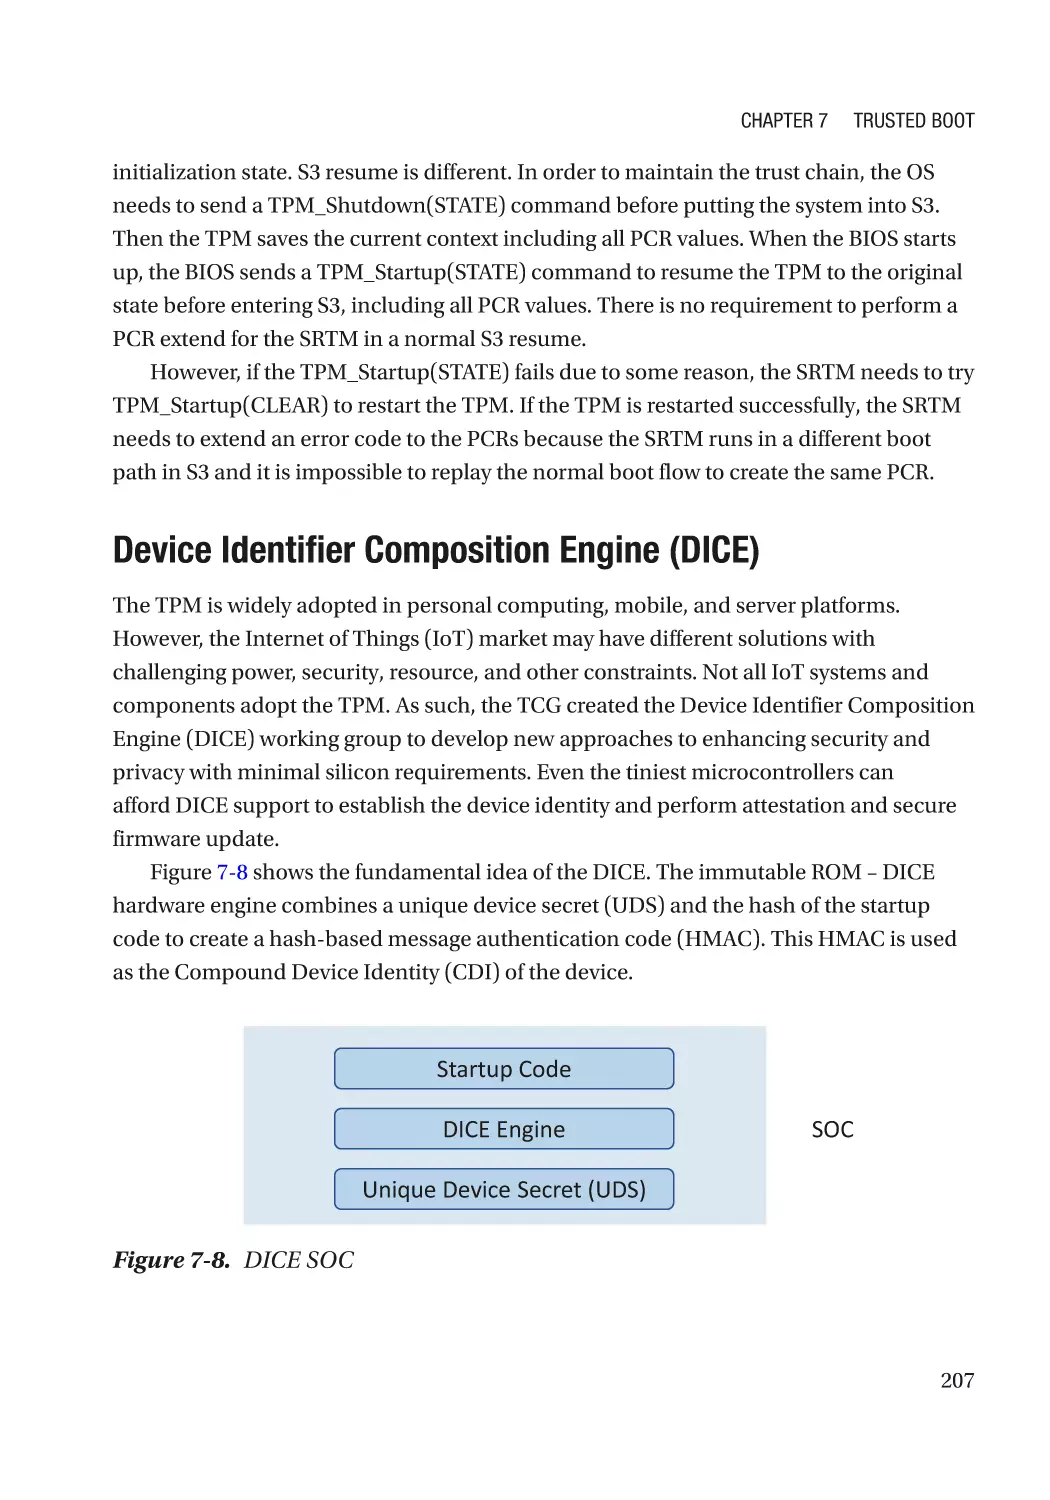 Device Identifier Composition Engine (DICE)